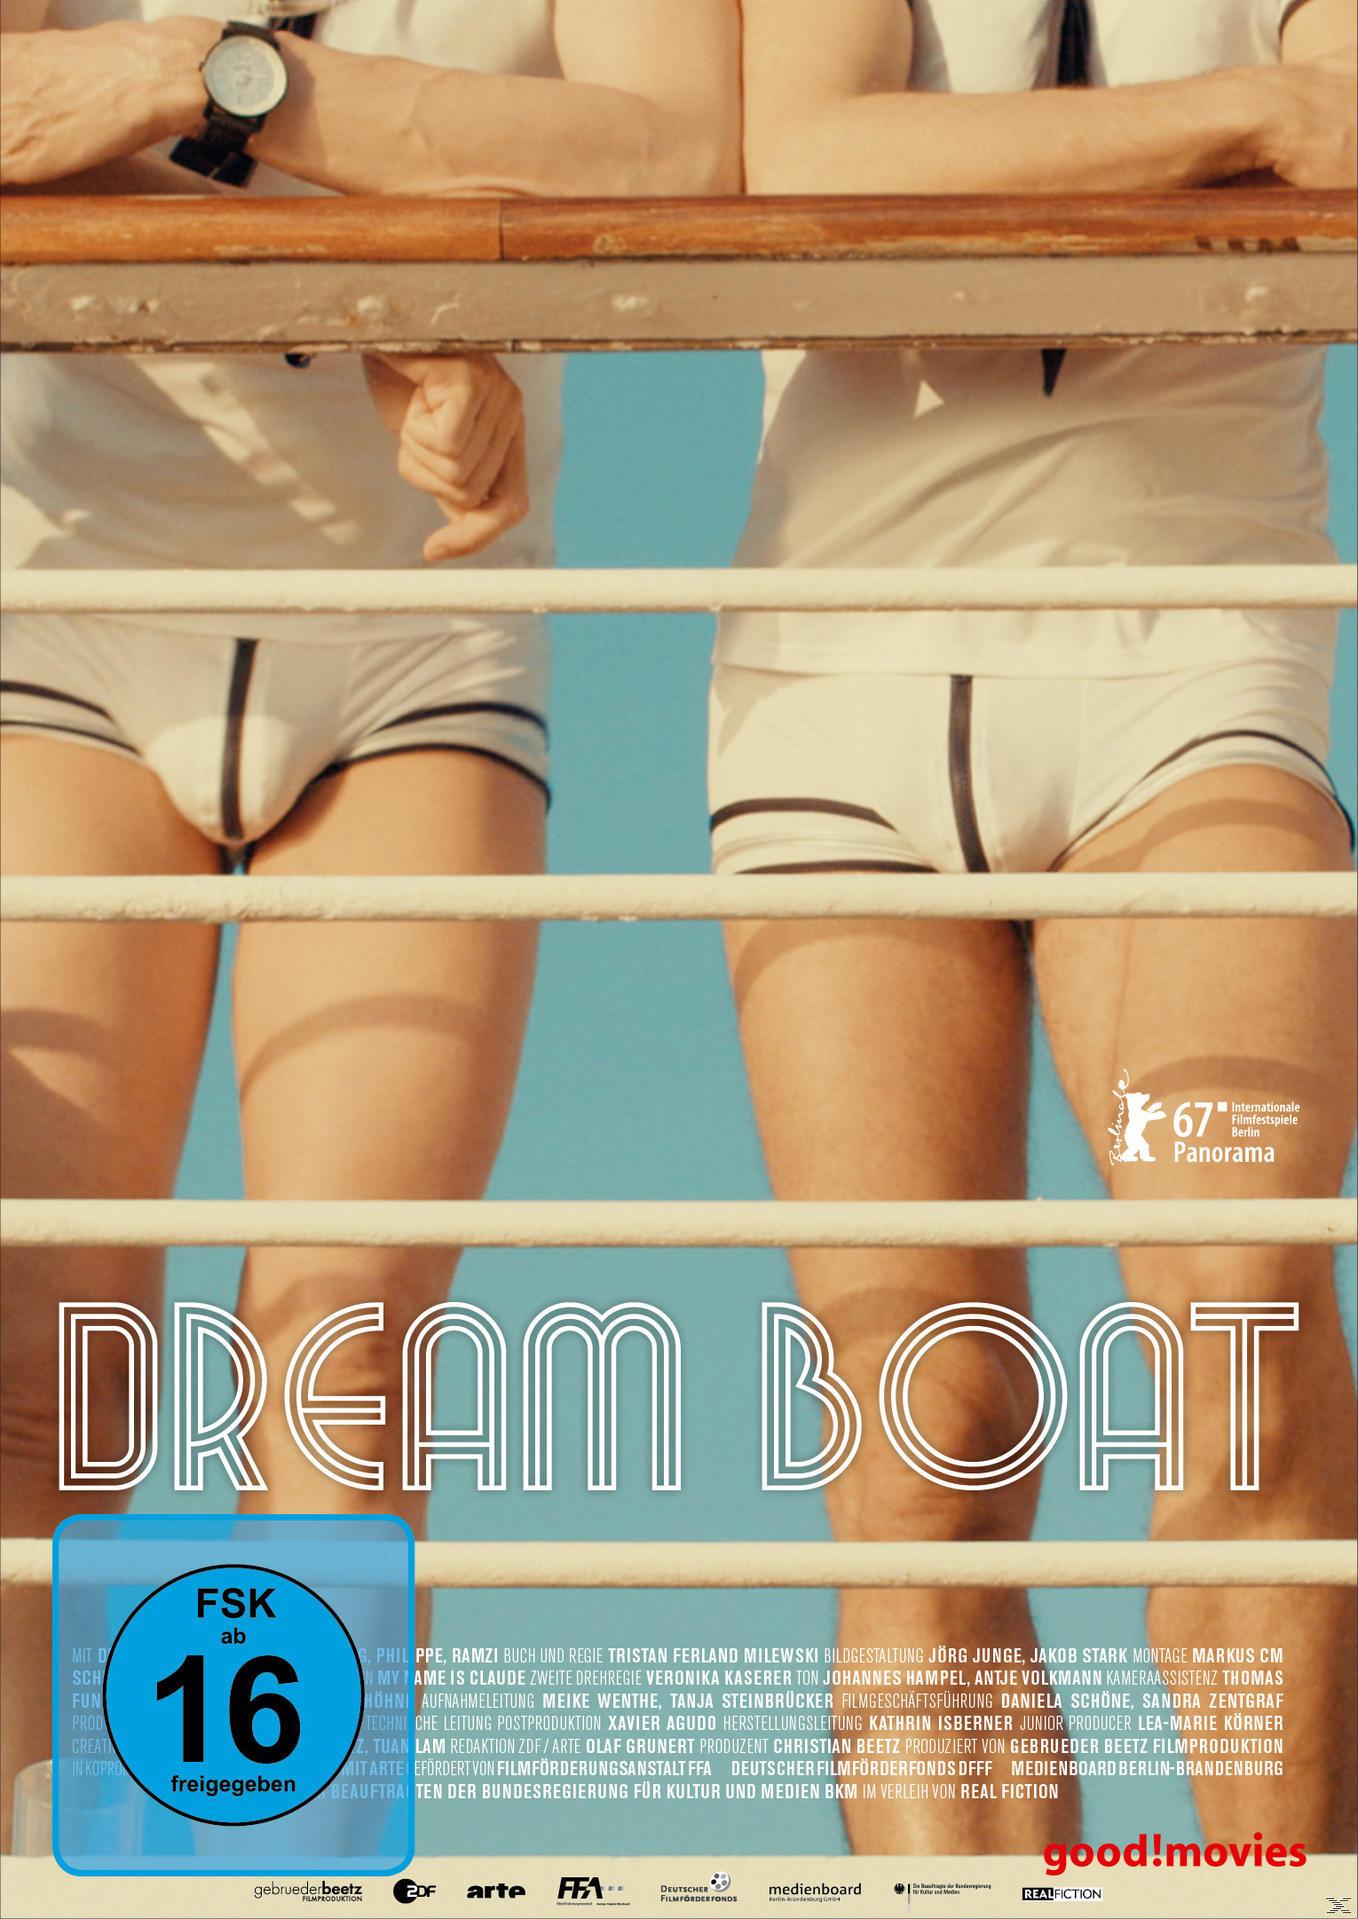 + Boat CD Dream DVD